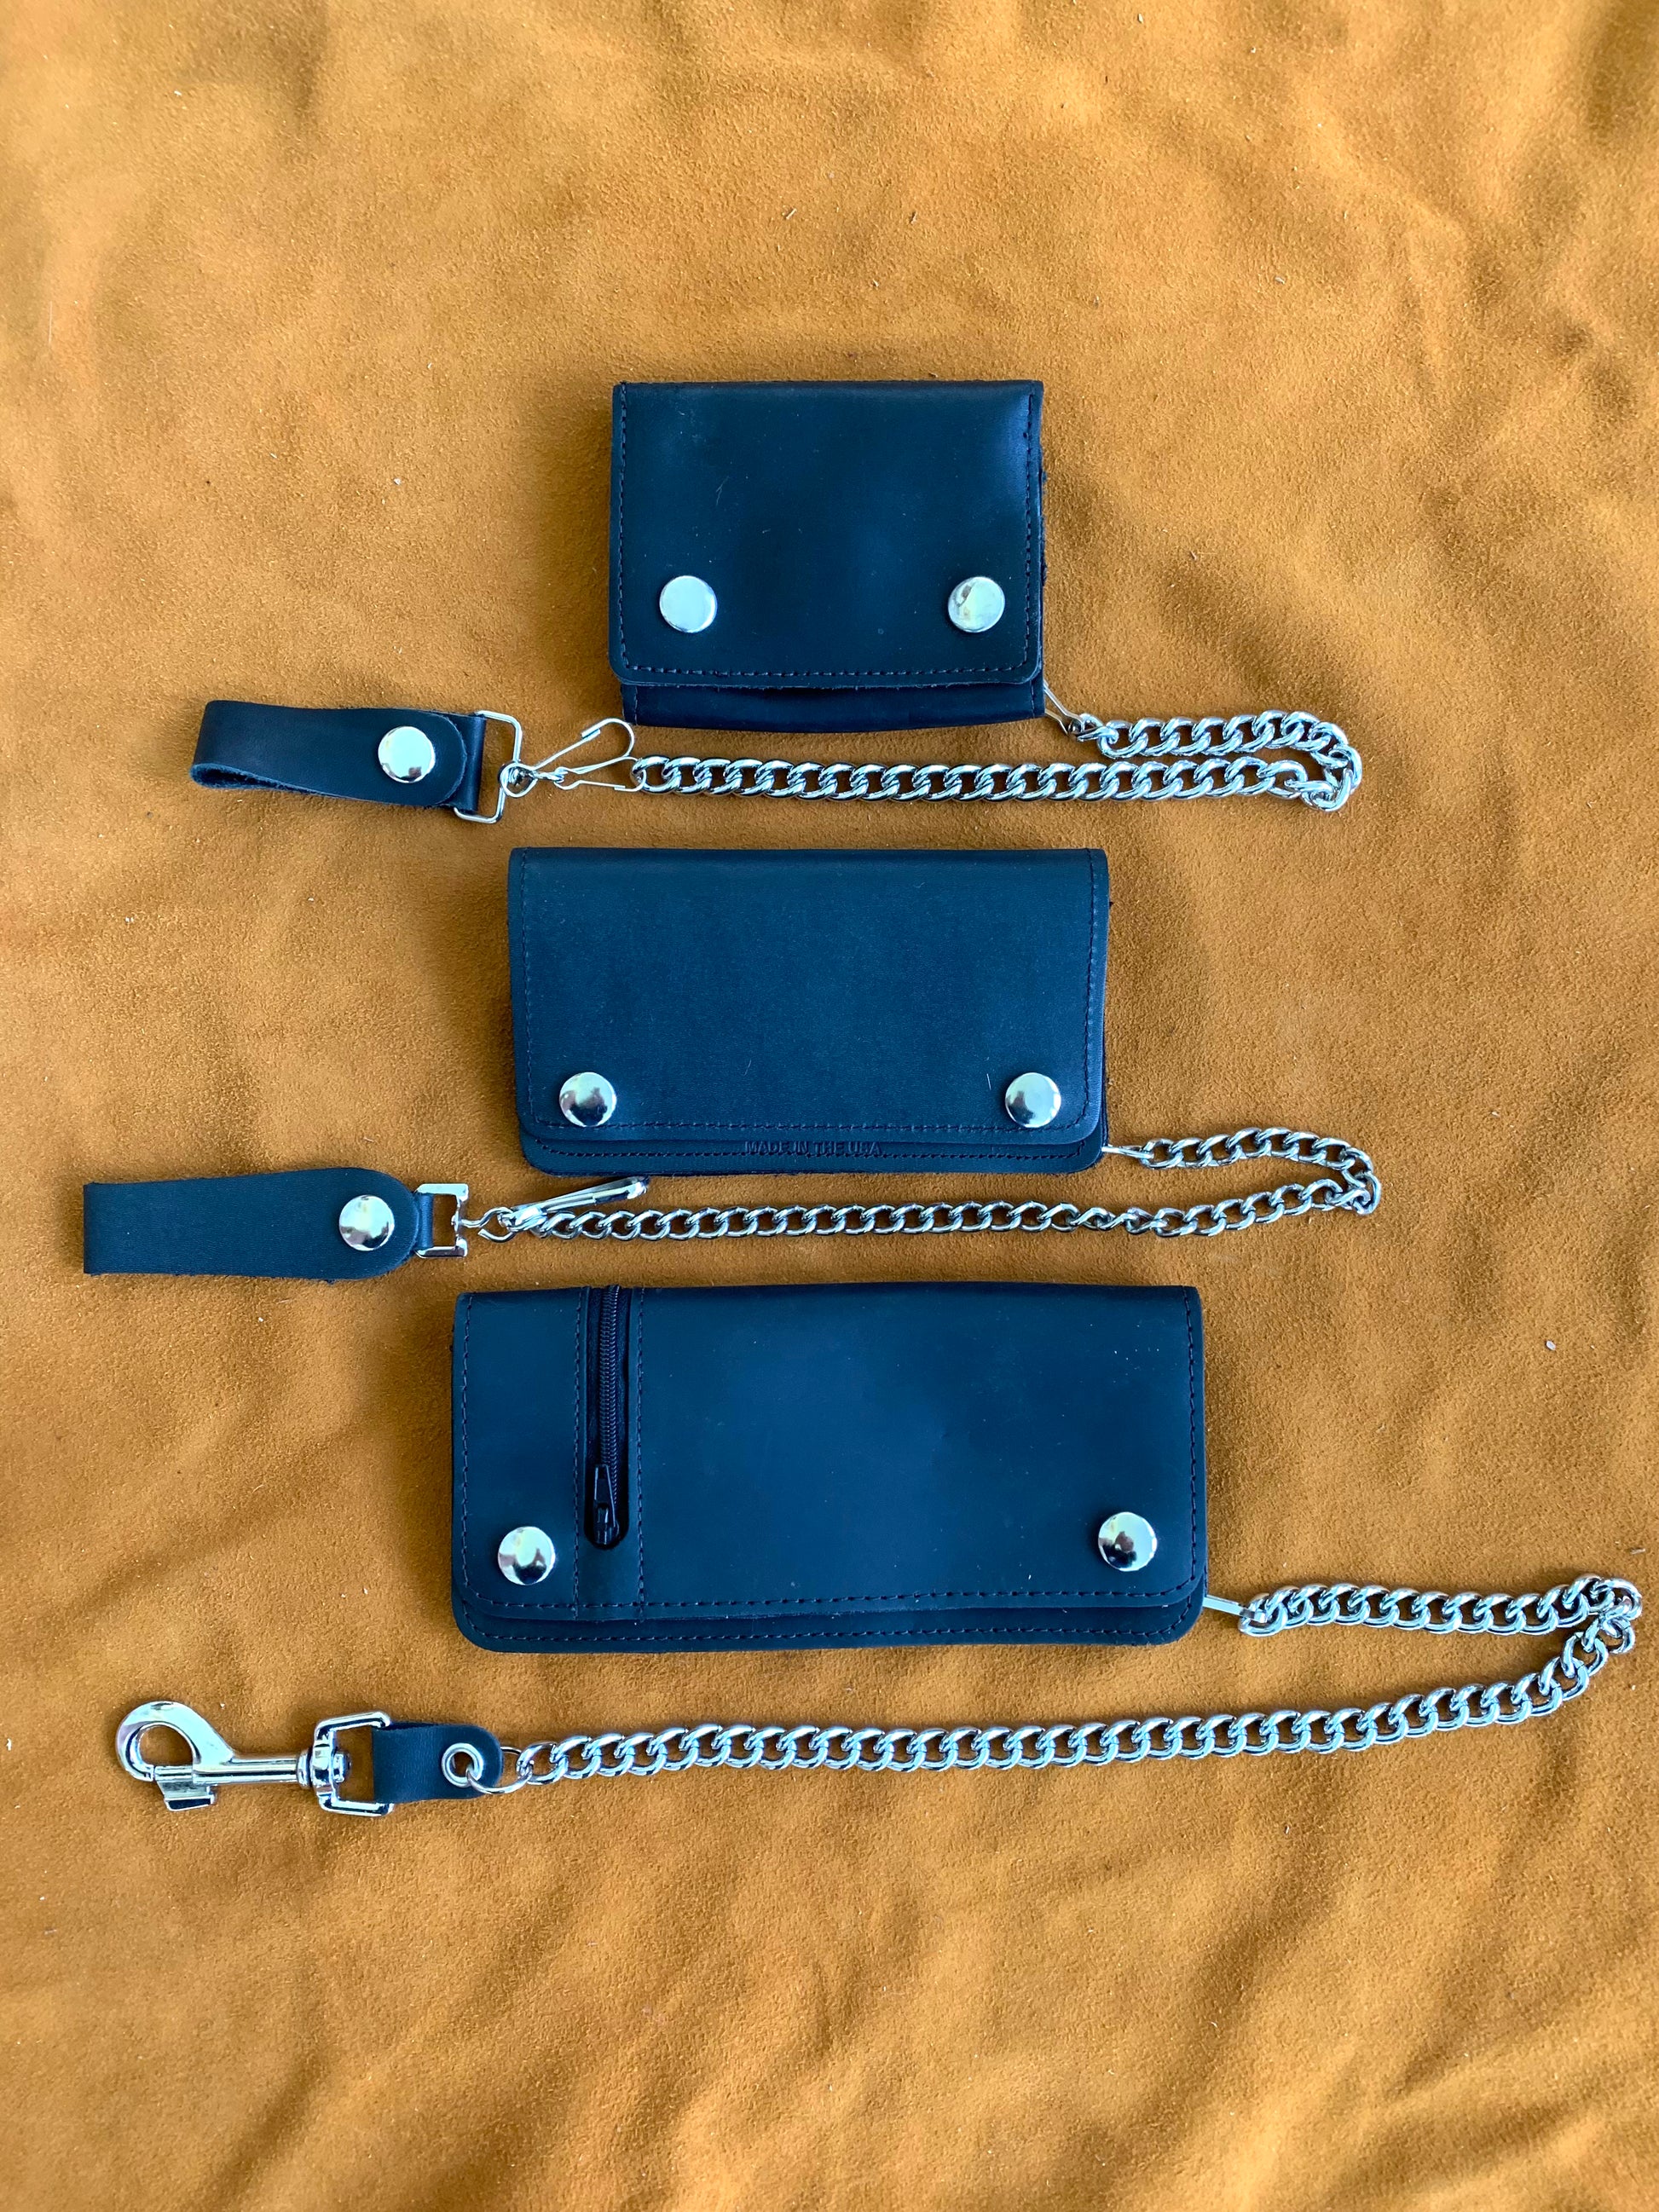 Classic Bi-Fold Leather Chain Wallet